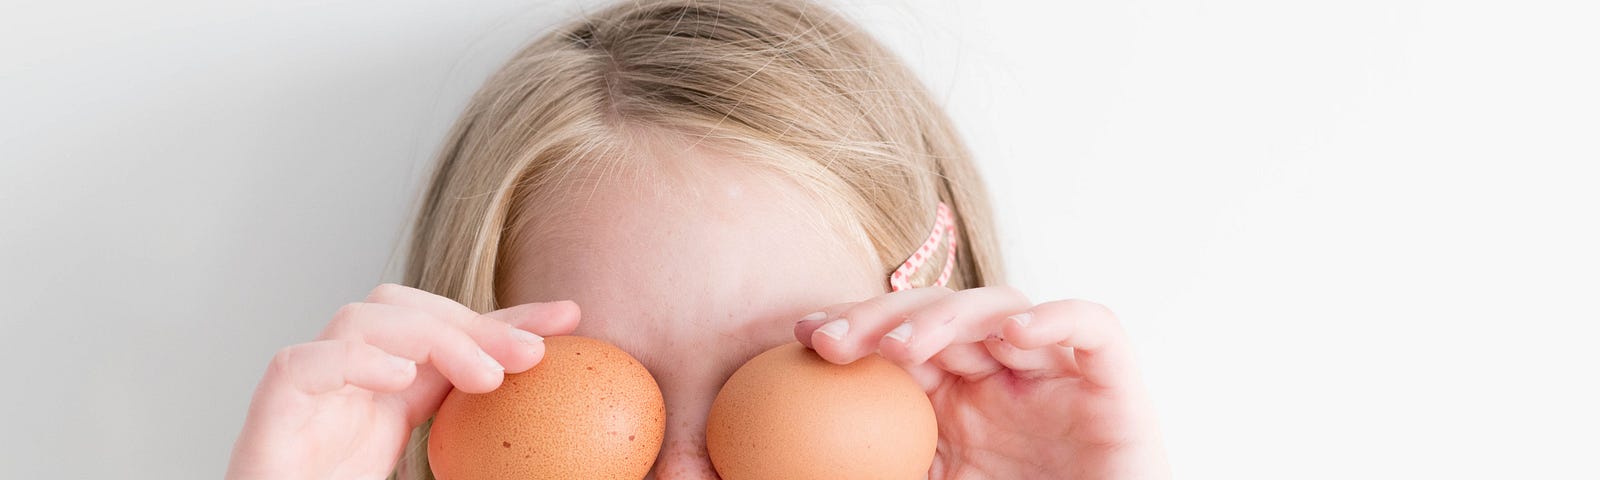 Little girl holding eggs in front of her eyes.